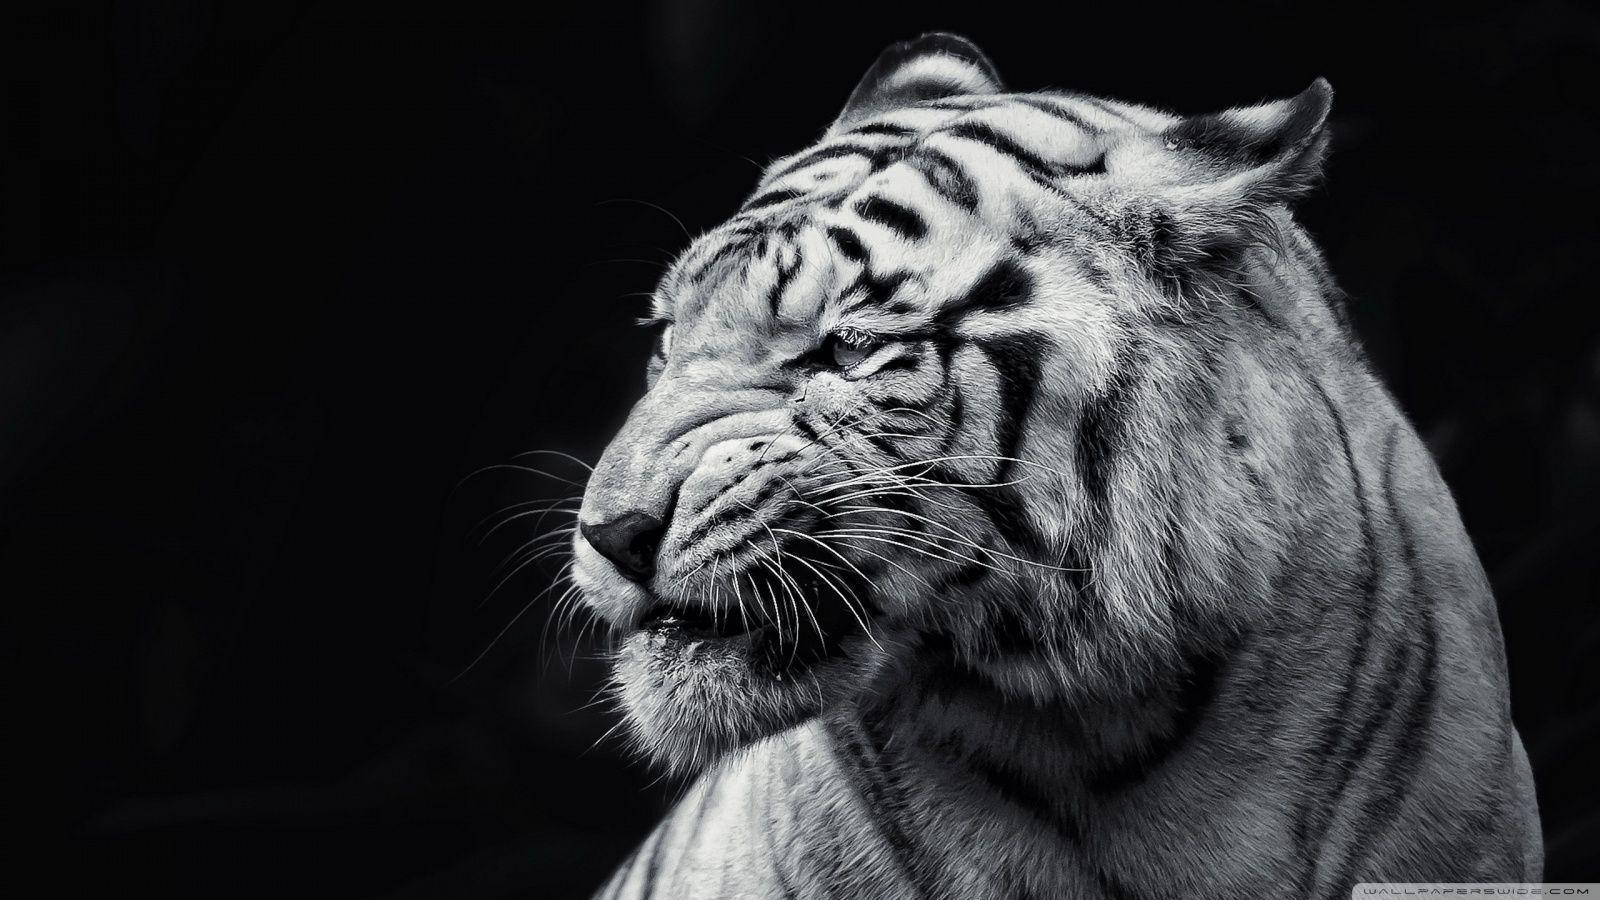 Tiger Black and White HD desktop wallpaper, High Definition